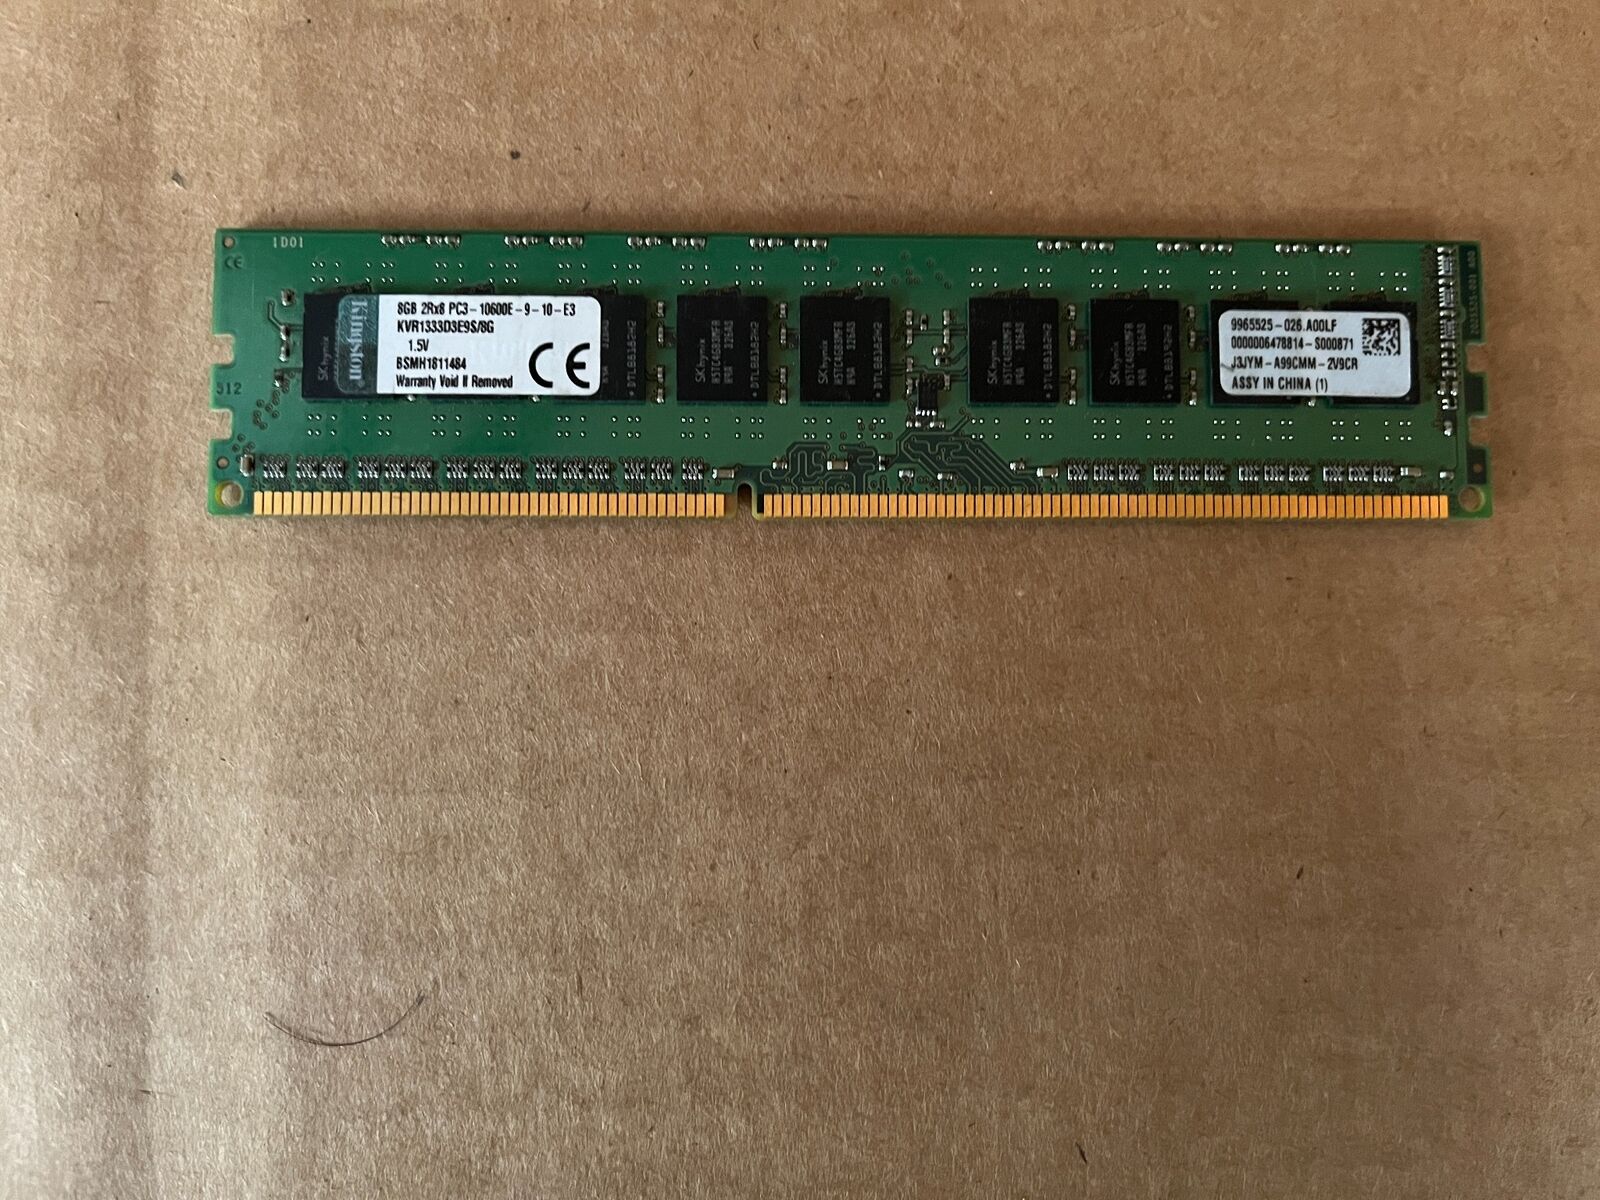 KINGSTON 8GB PC3-10600 DIMM 1333 MHZ DDR3 SDRAM MEMORY (KVR1333D3E9S/8G) L2-2(18